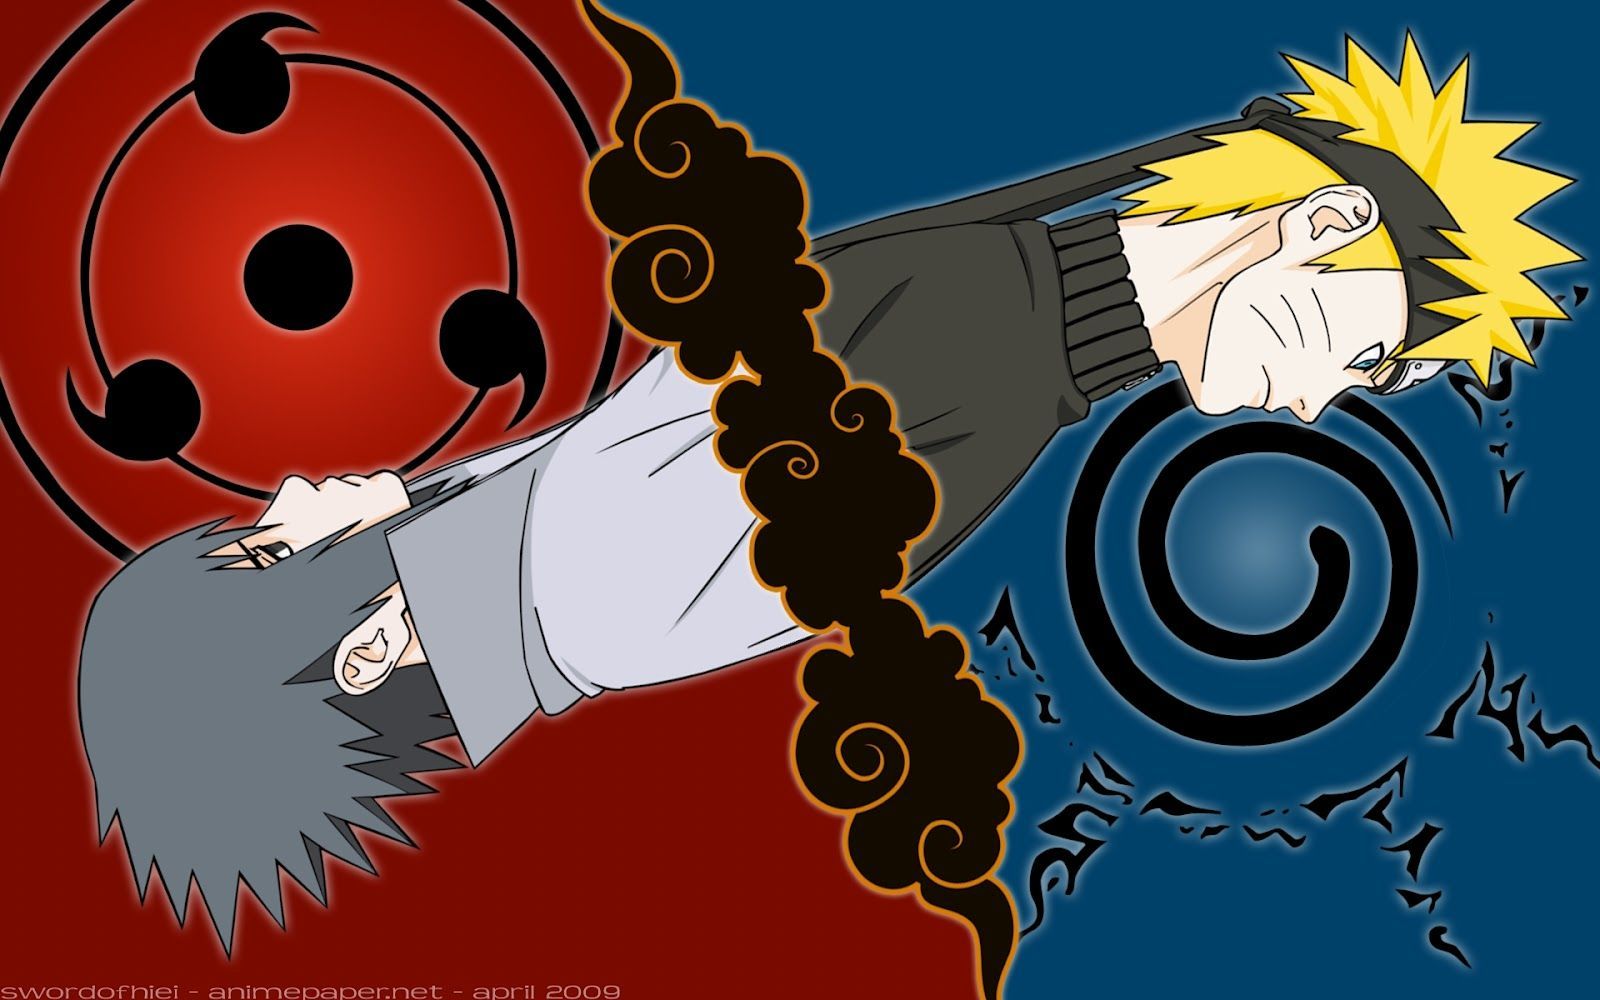 Naruto and Sasuke Wallpaper Image for Lumia - Cartoons Backgrounds